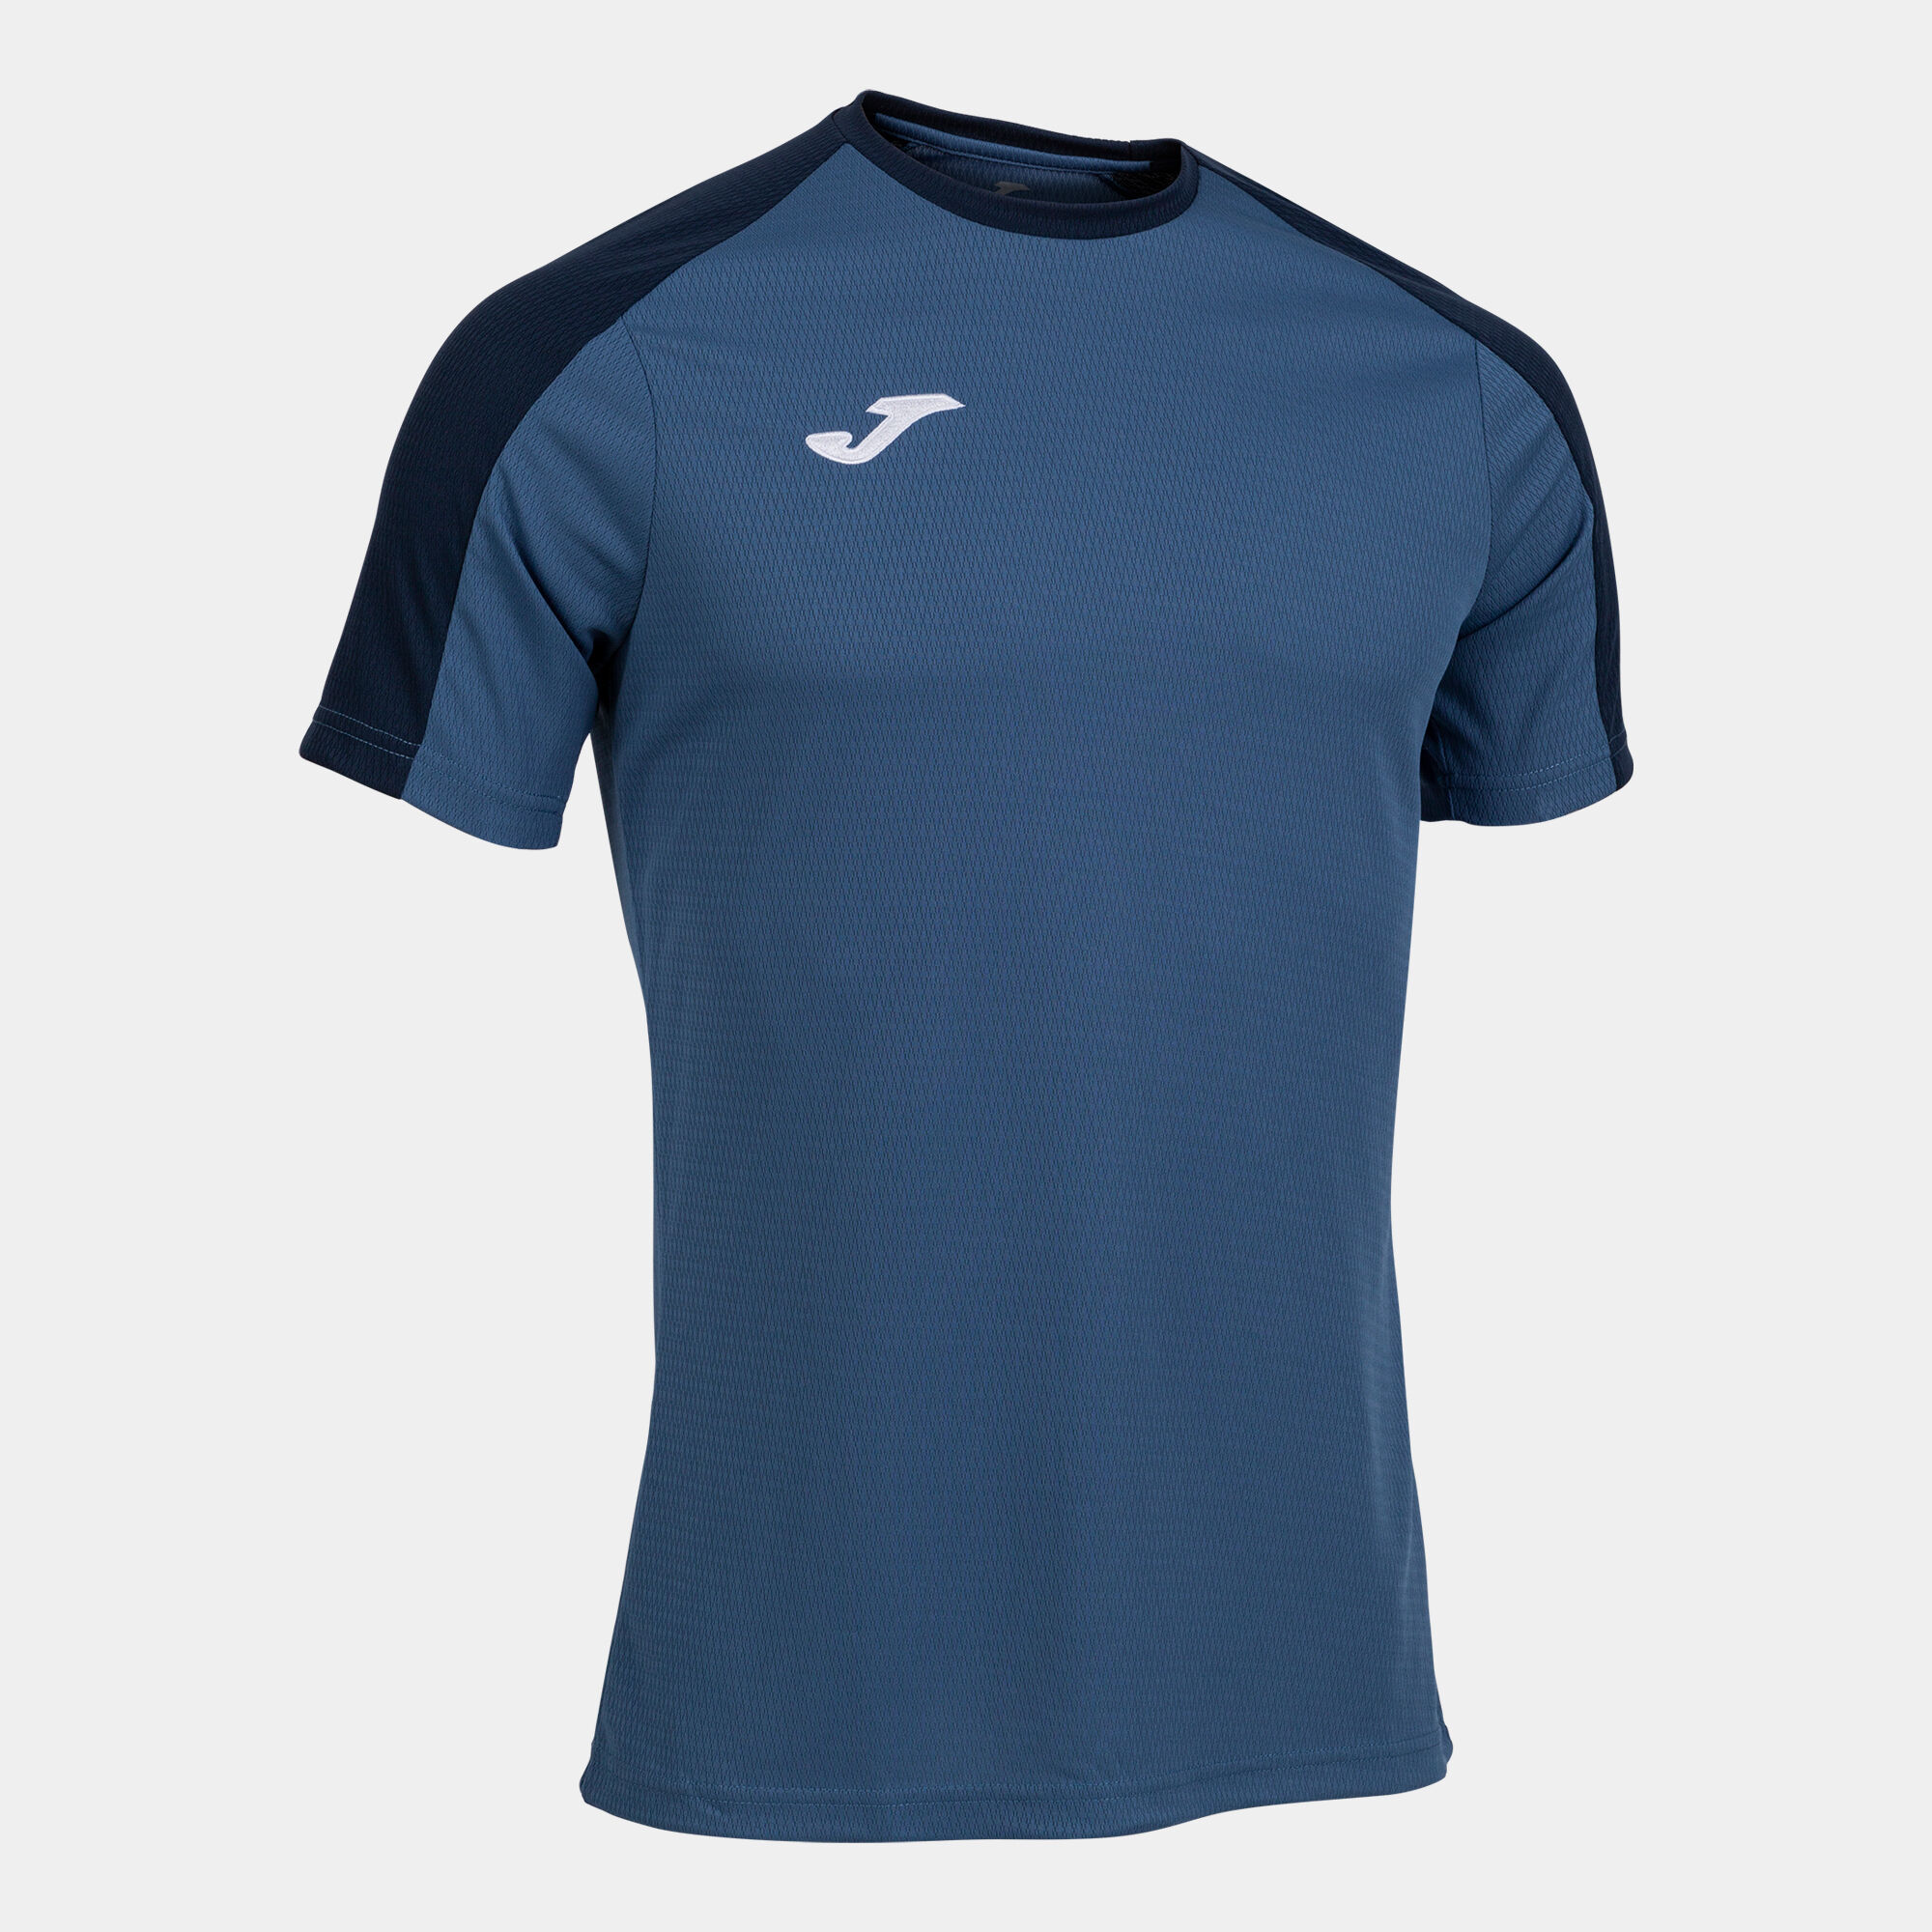 Shirt short sleeve man Eco Championship blue navy blue